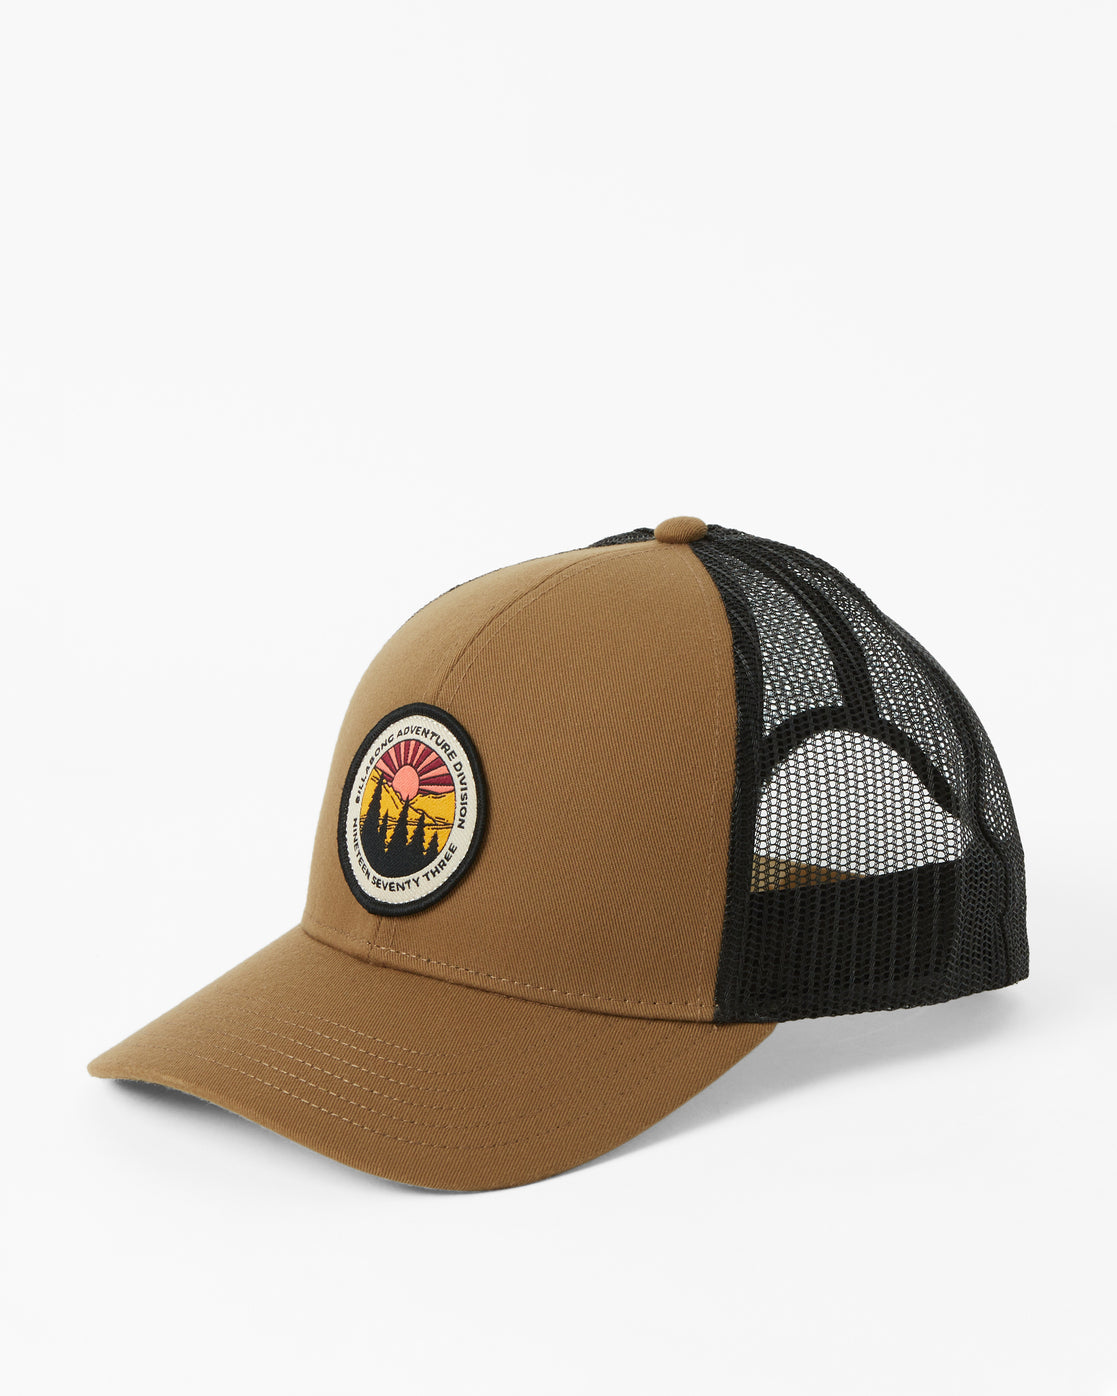 A/Div Walled Trucker Hat